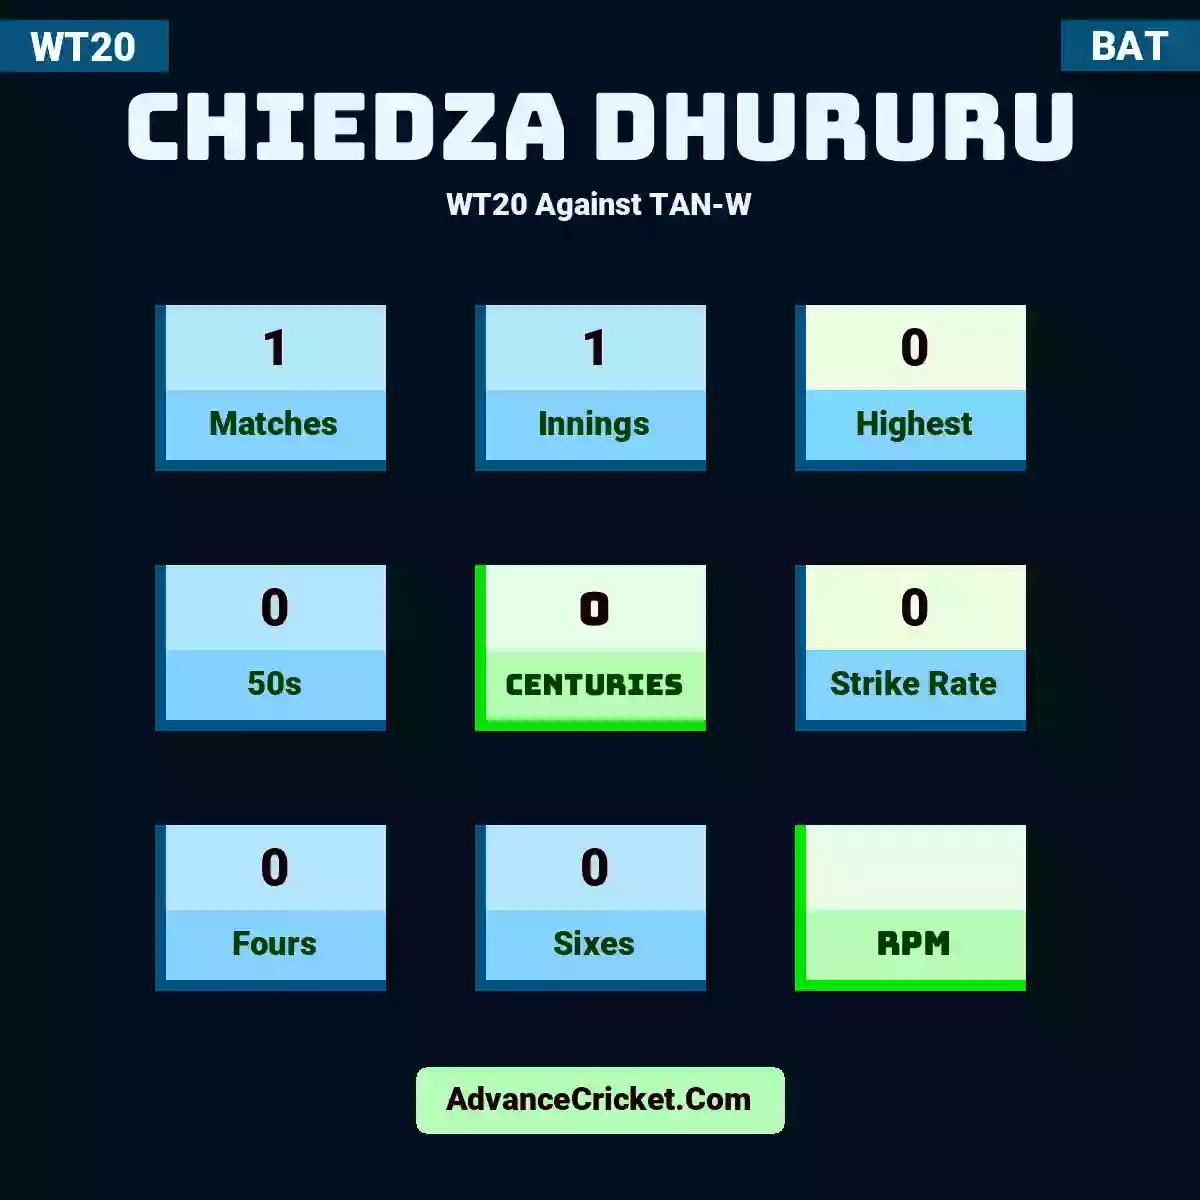 Chiedza Dhururu WT20  Against TAN-W, Chiedza Dhururu played 1 matches, scored 0 runs as highest, 0 half-centuries, and 0 centuries, with a strike rate of 0. C.Dhururu hit 0 fours and 0 sixes.